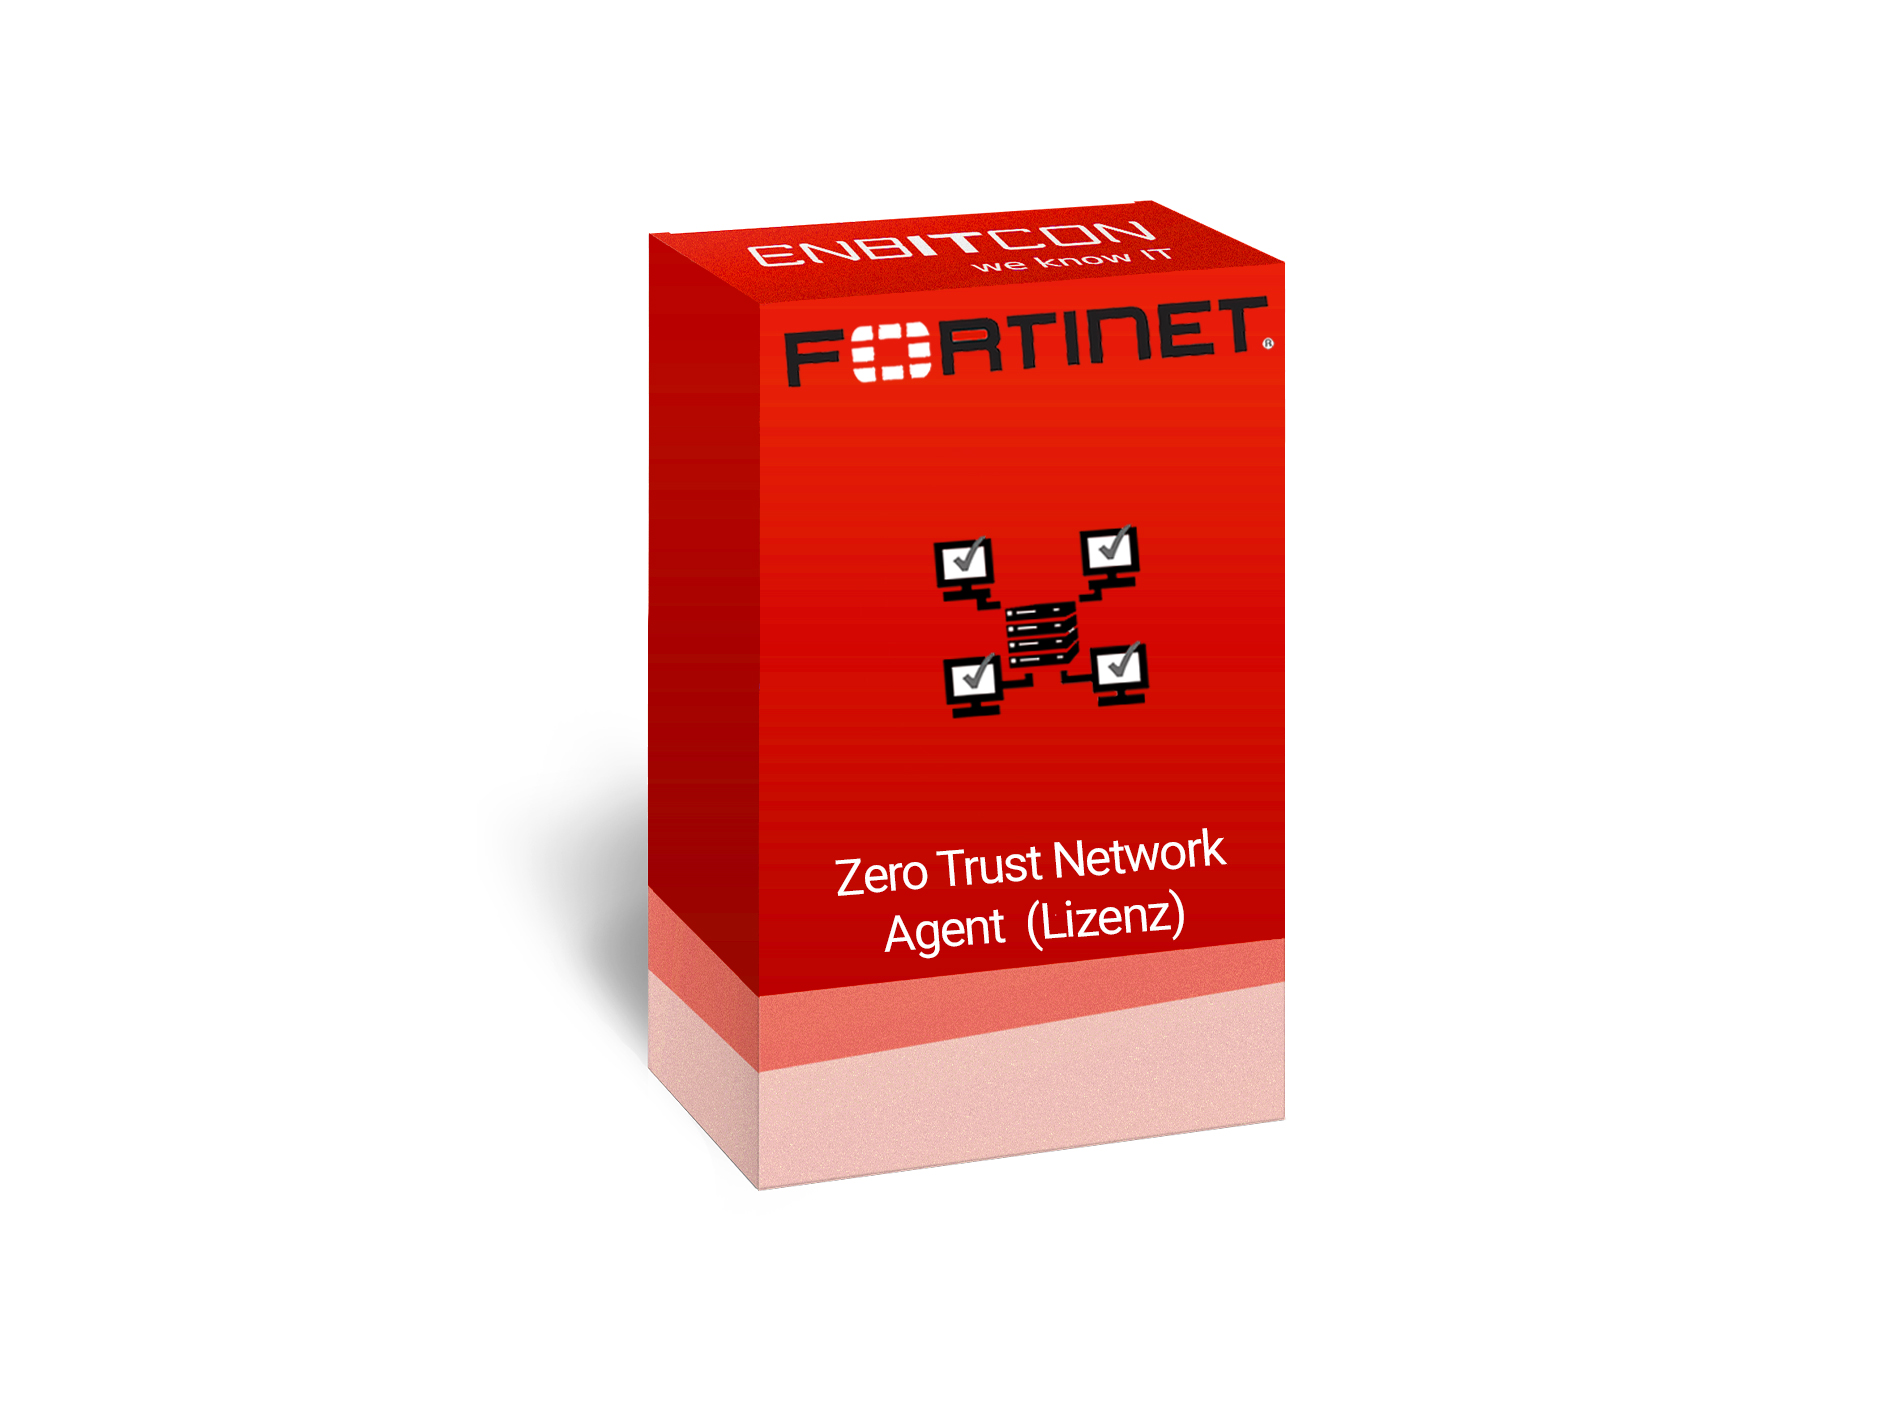 FortiClient Zero Trust Network Agent (On Prem)